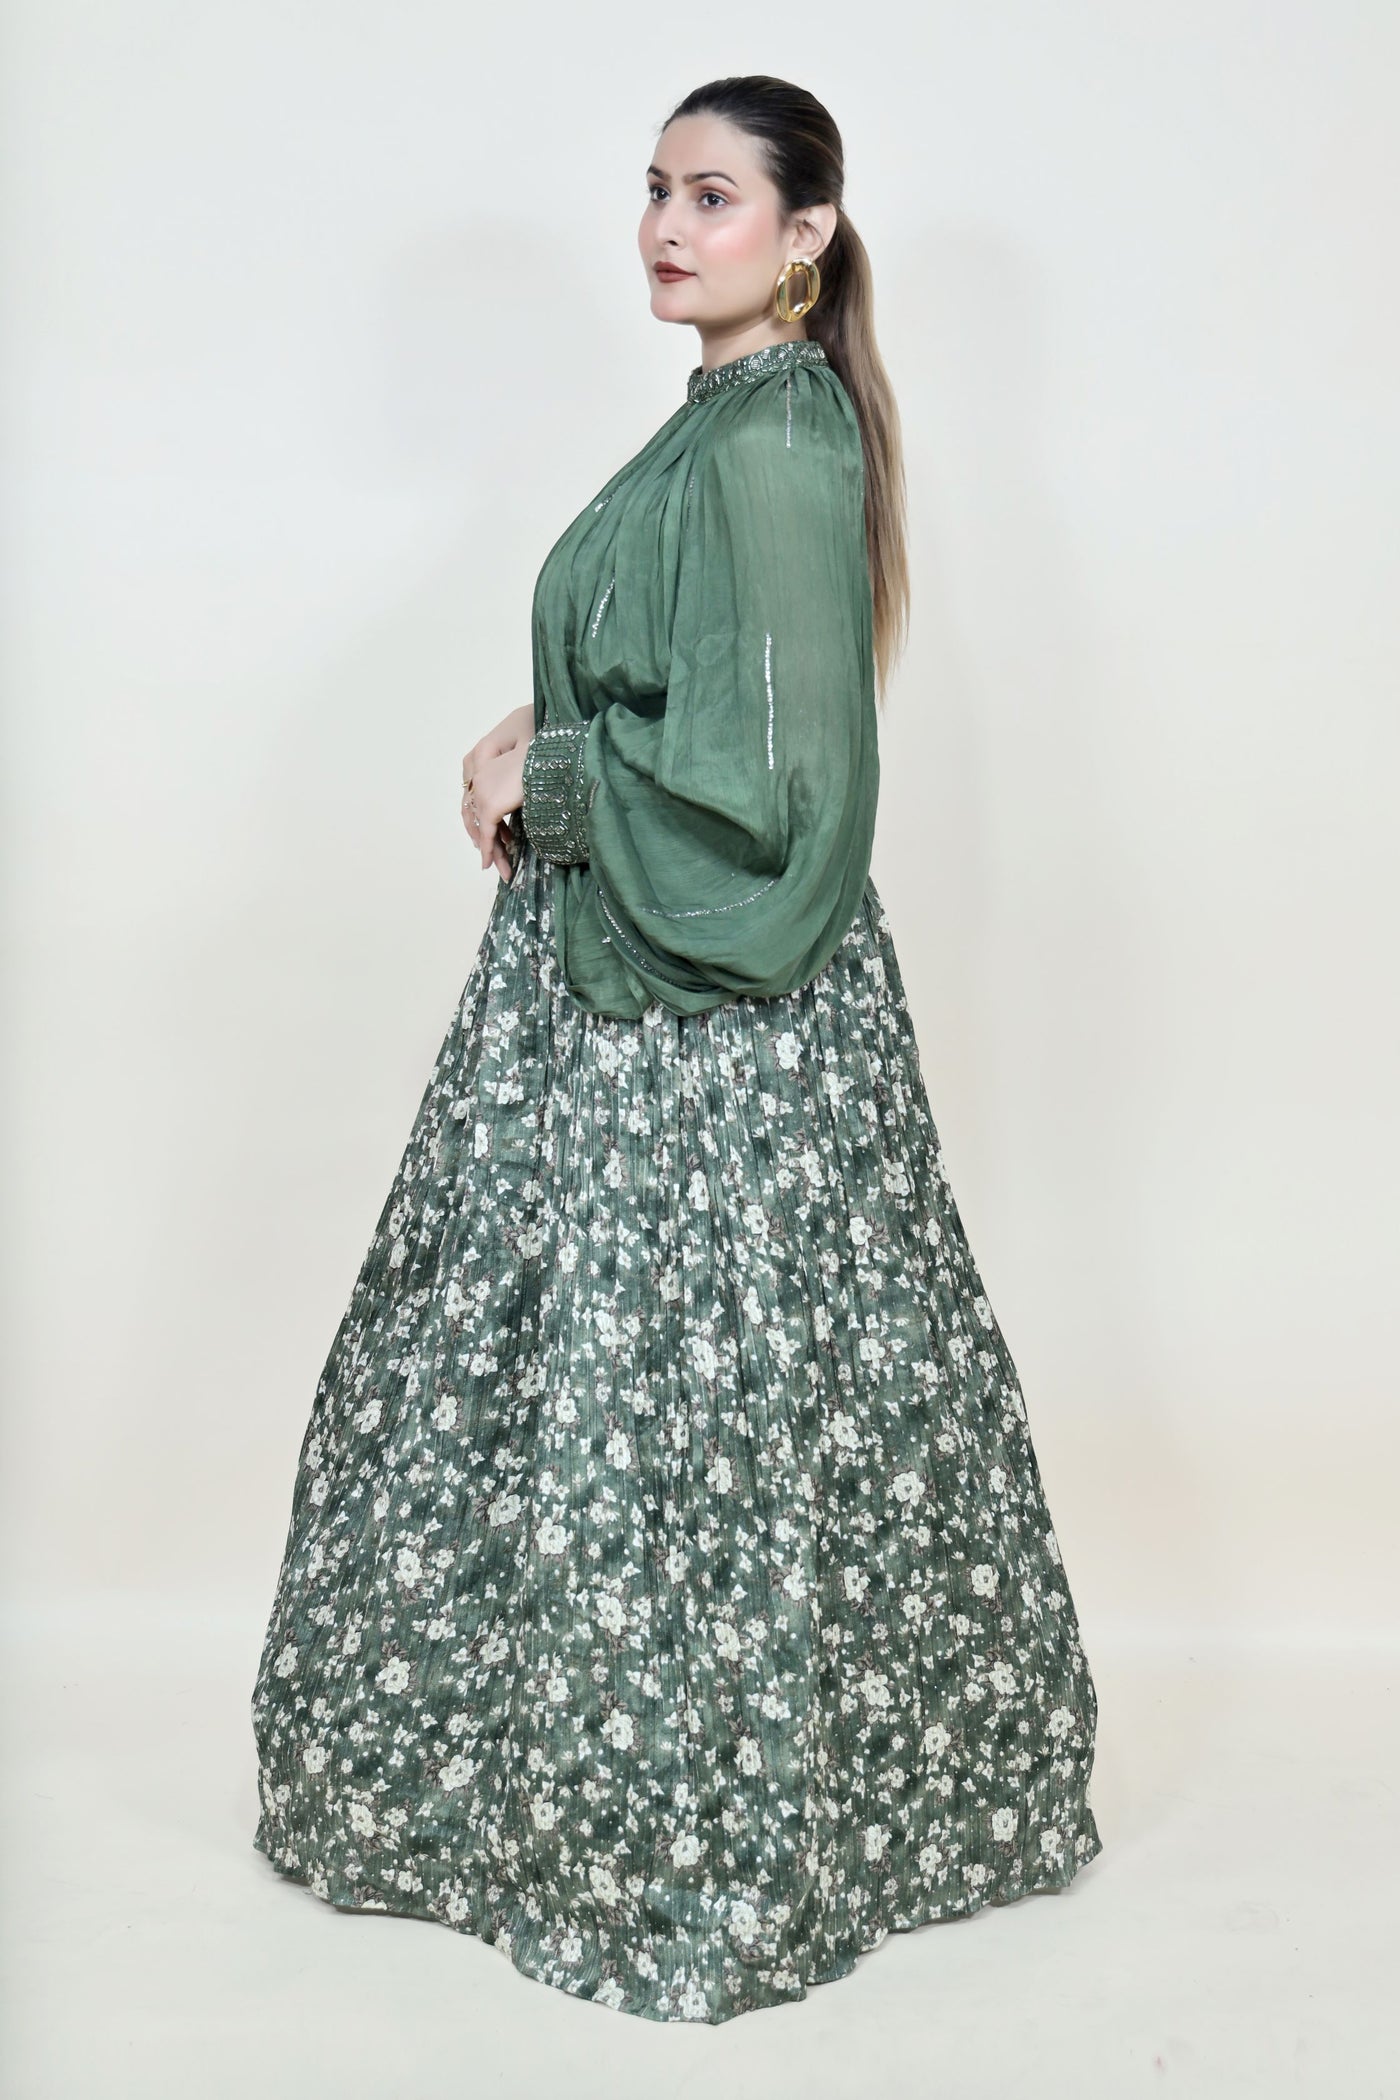 classic green color floral motif printed dress